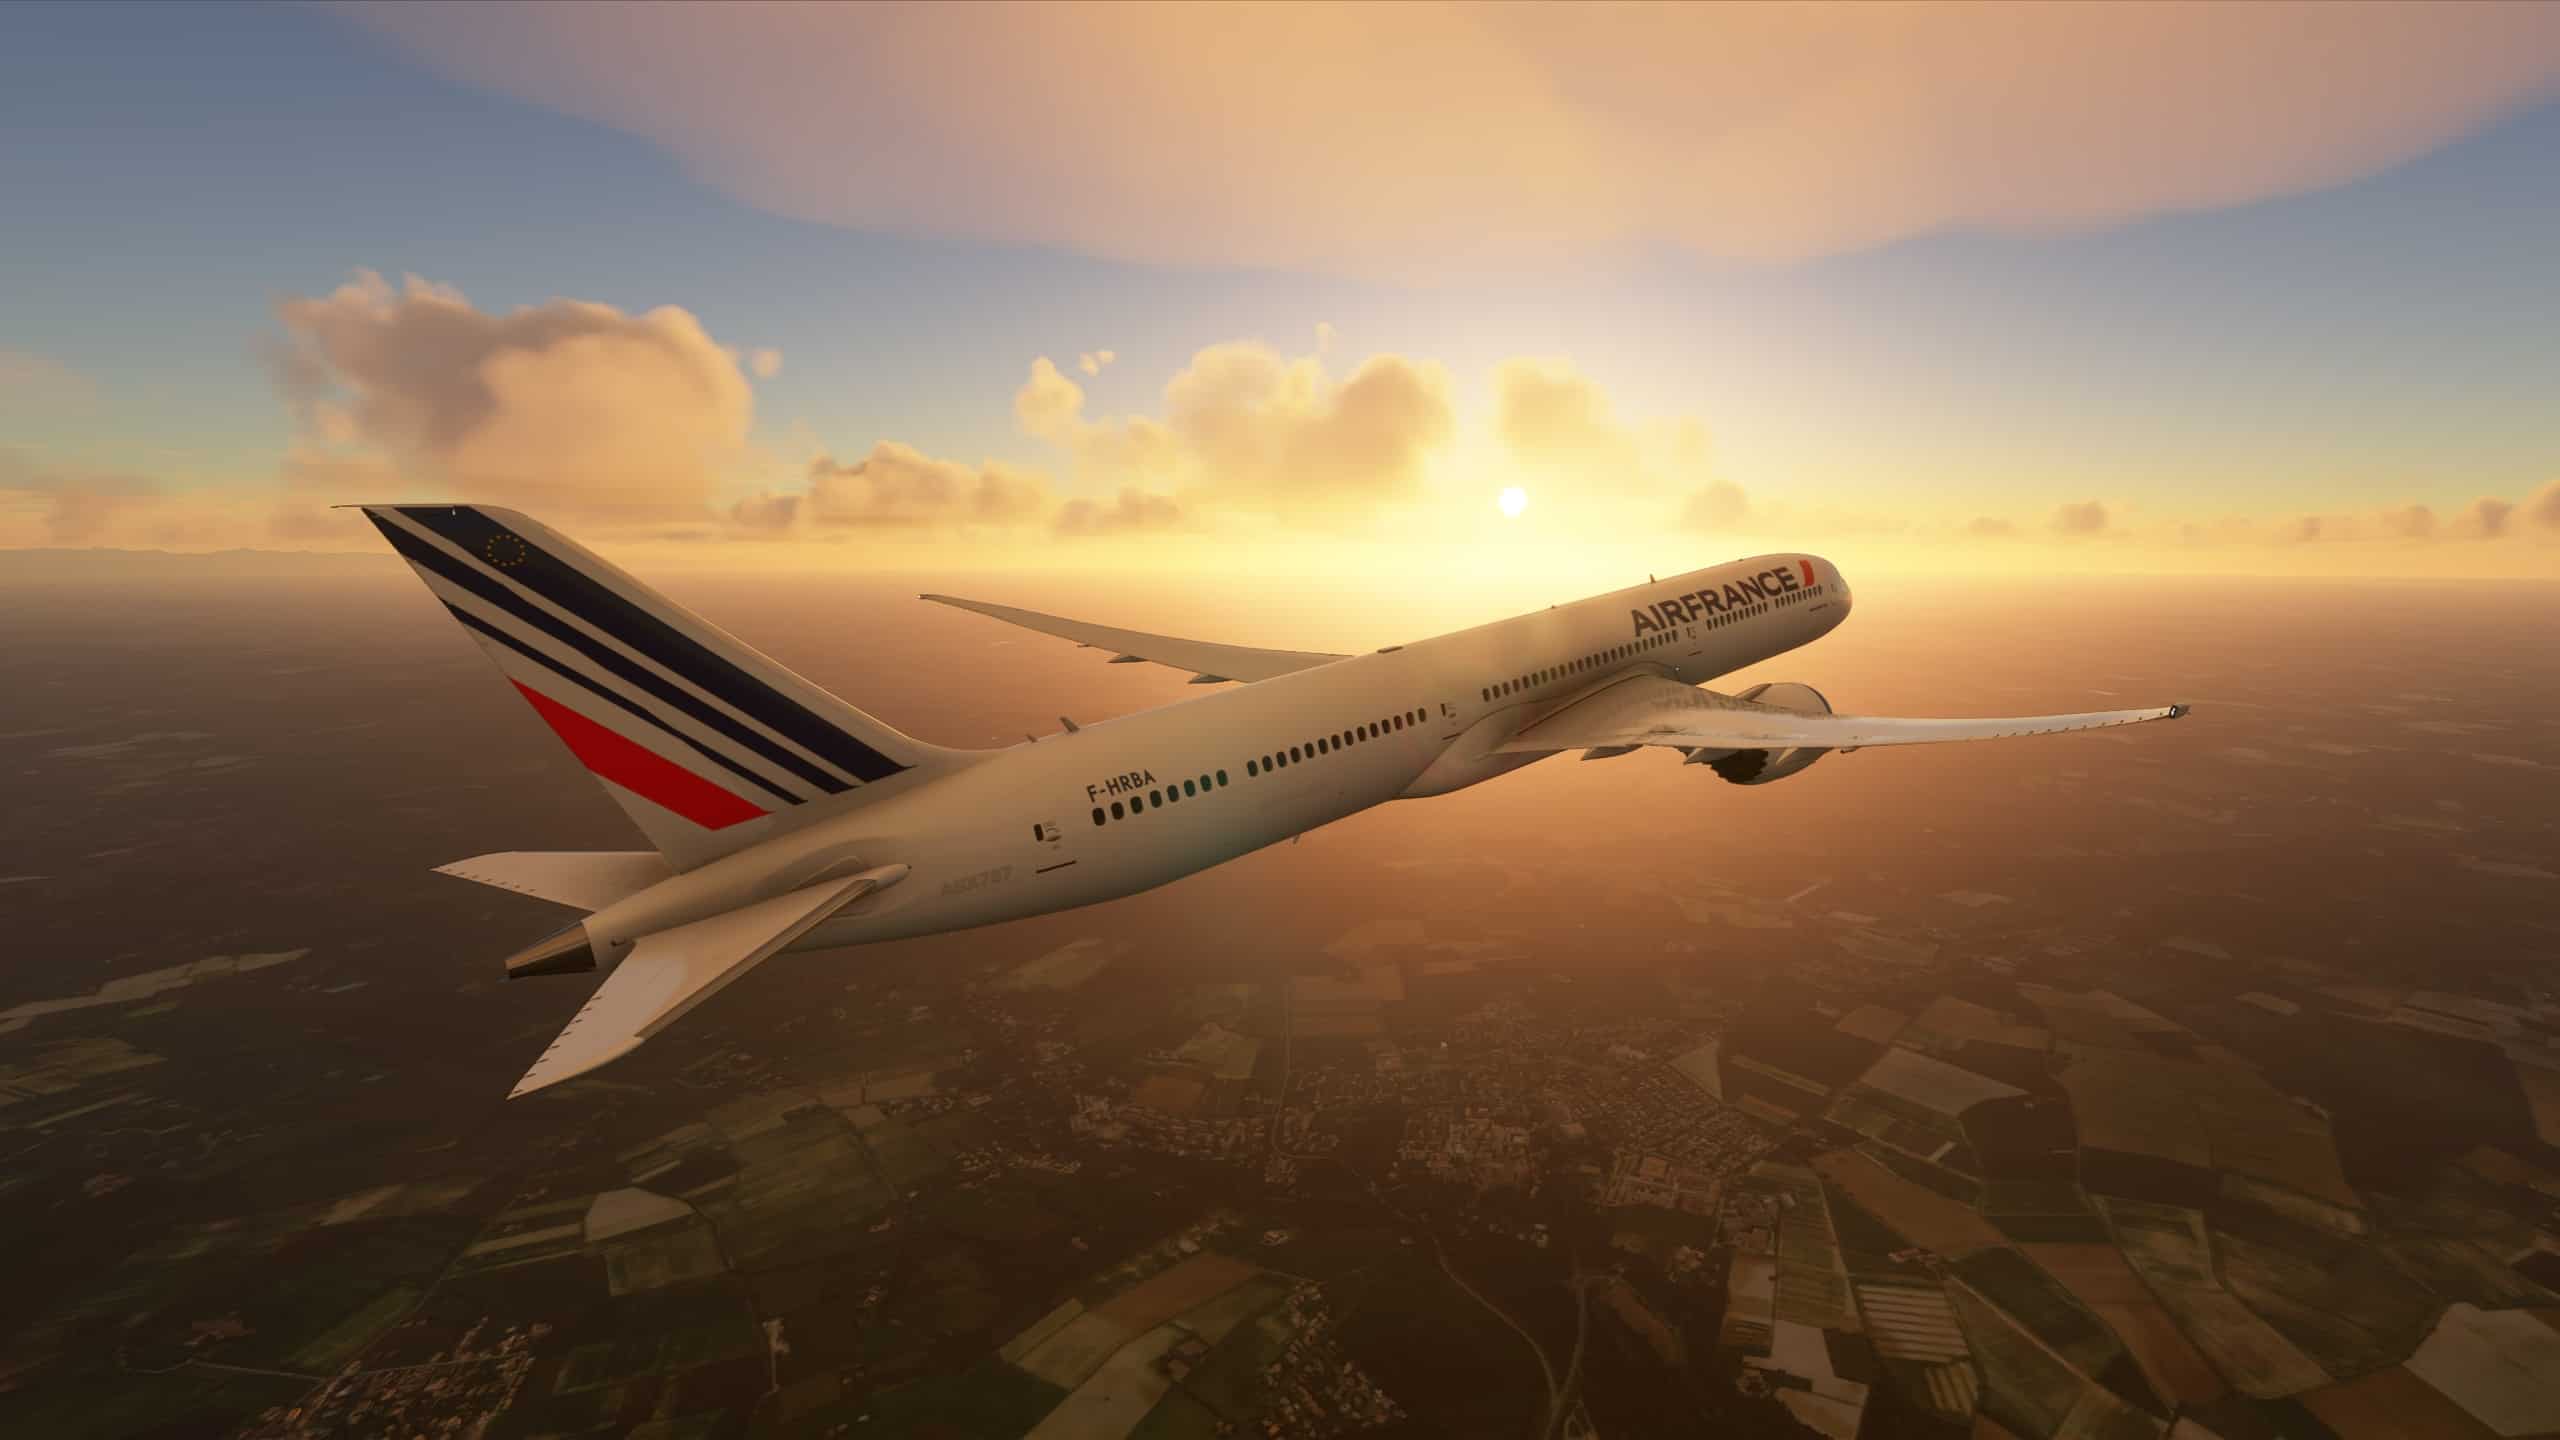 Air France B787-10 - Microsoft Flight Simulator 2020 Mod